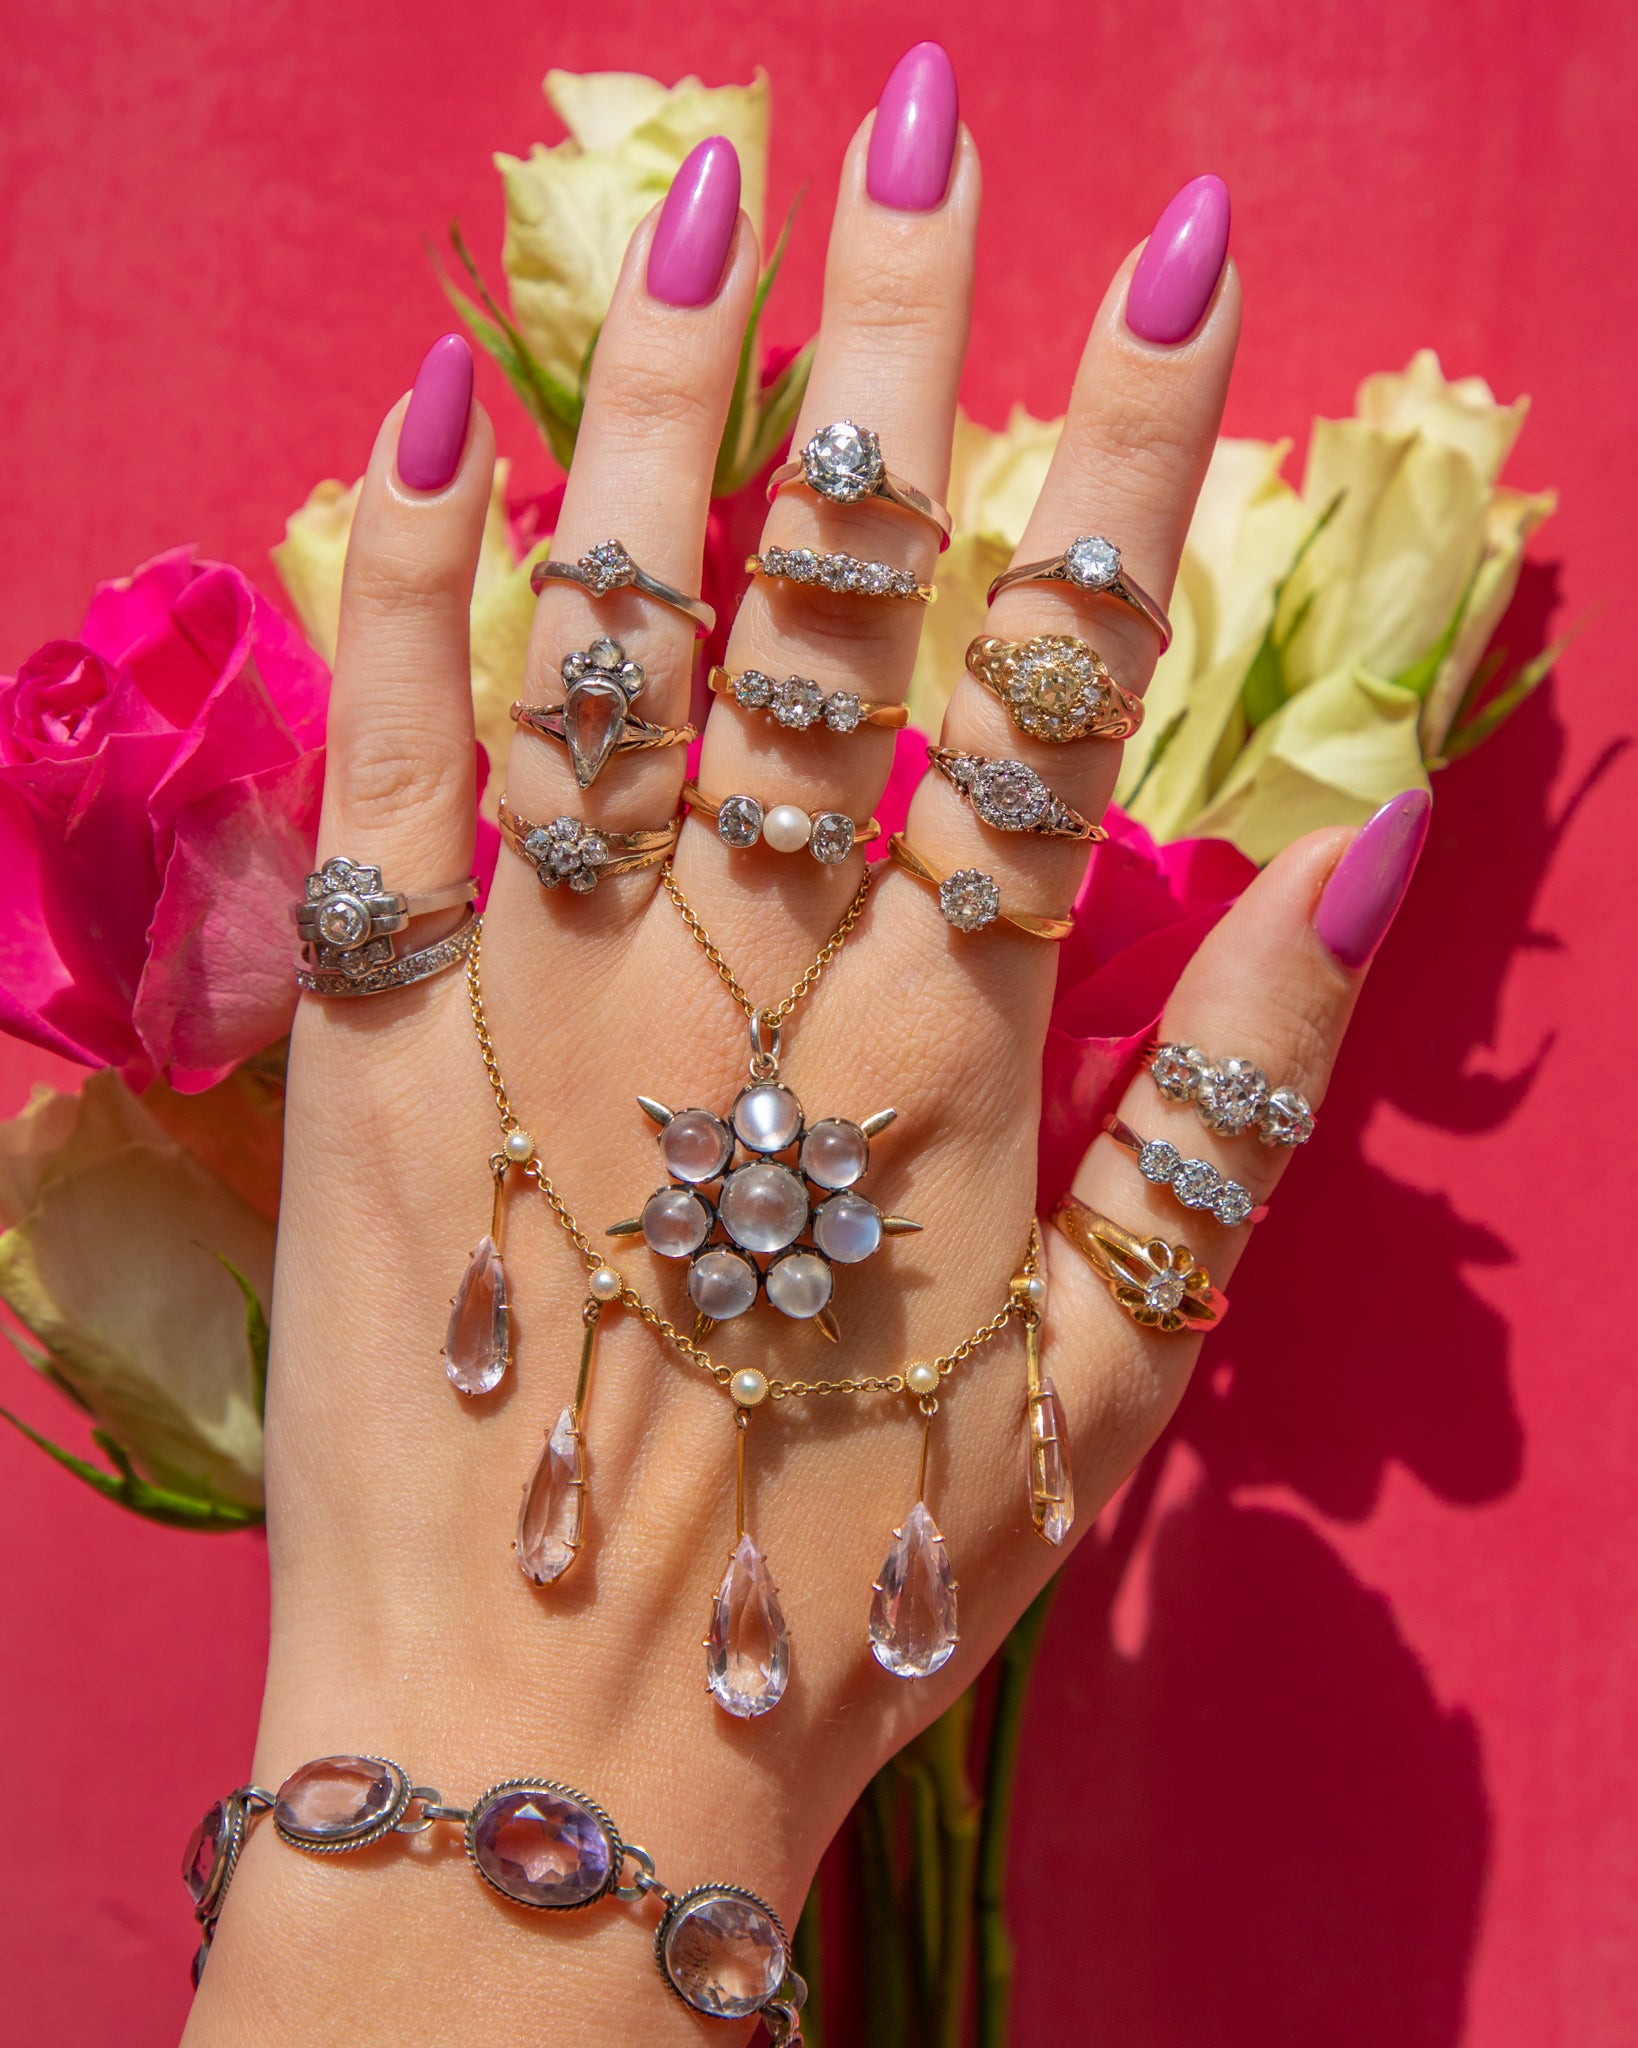 Round Cut Antique Engagement Ring - Livia - Sylvie Jewelry